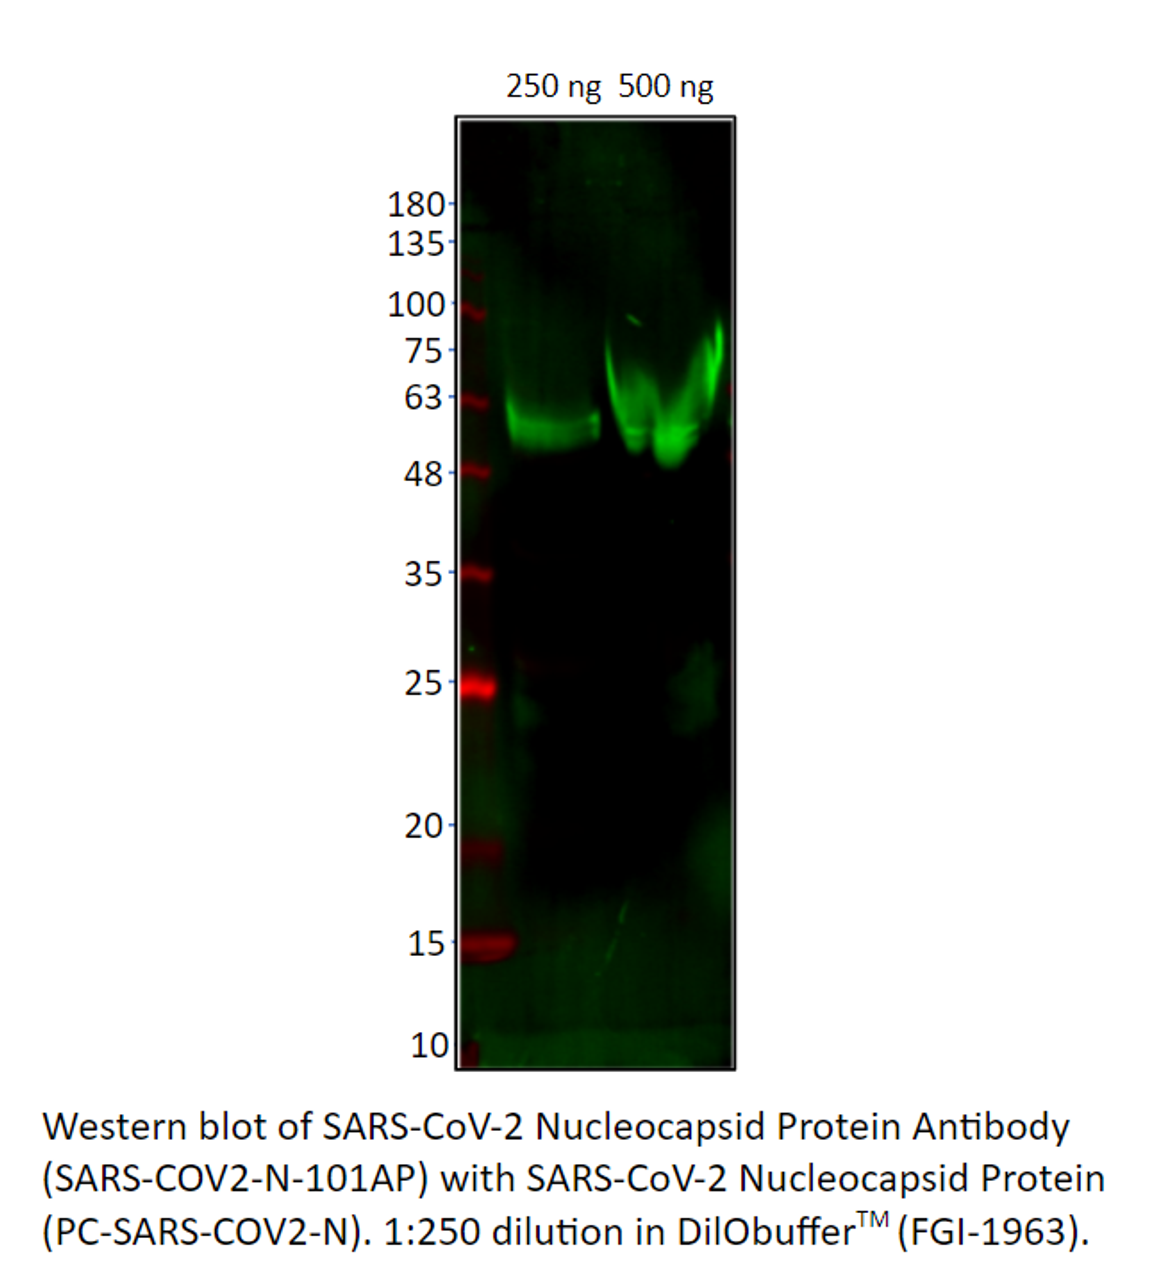 SARS-CoV-2 Nucleocapsid Protein Antibody from Fabgennix